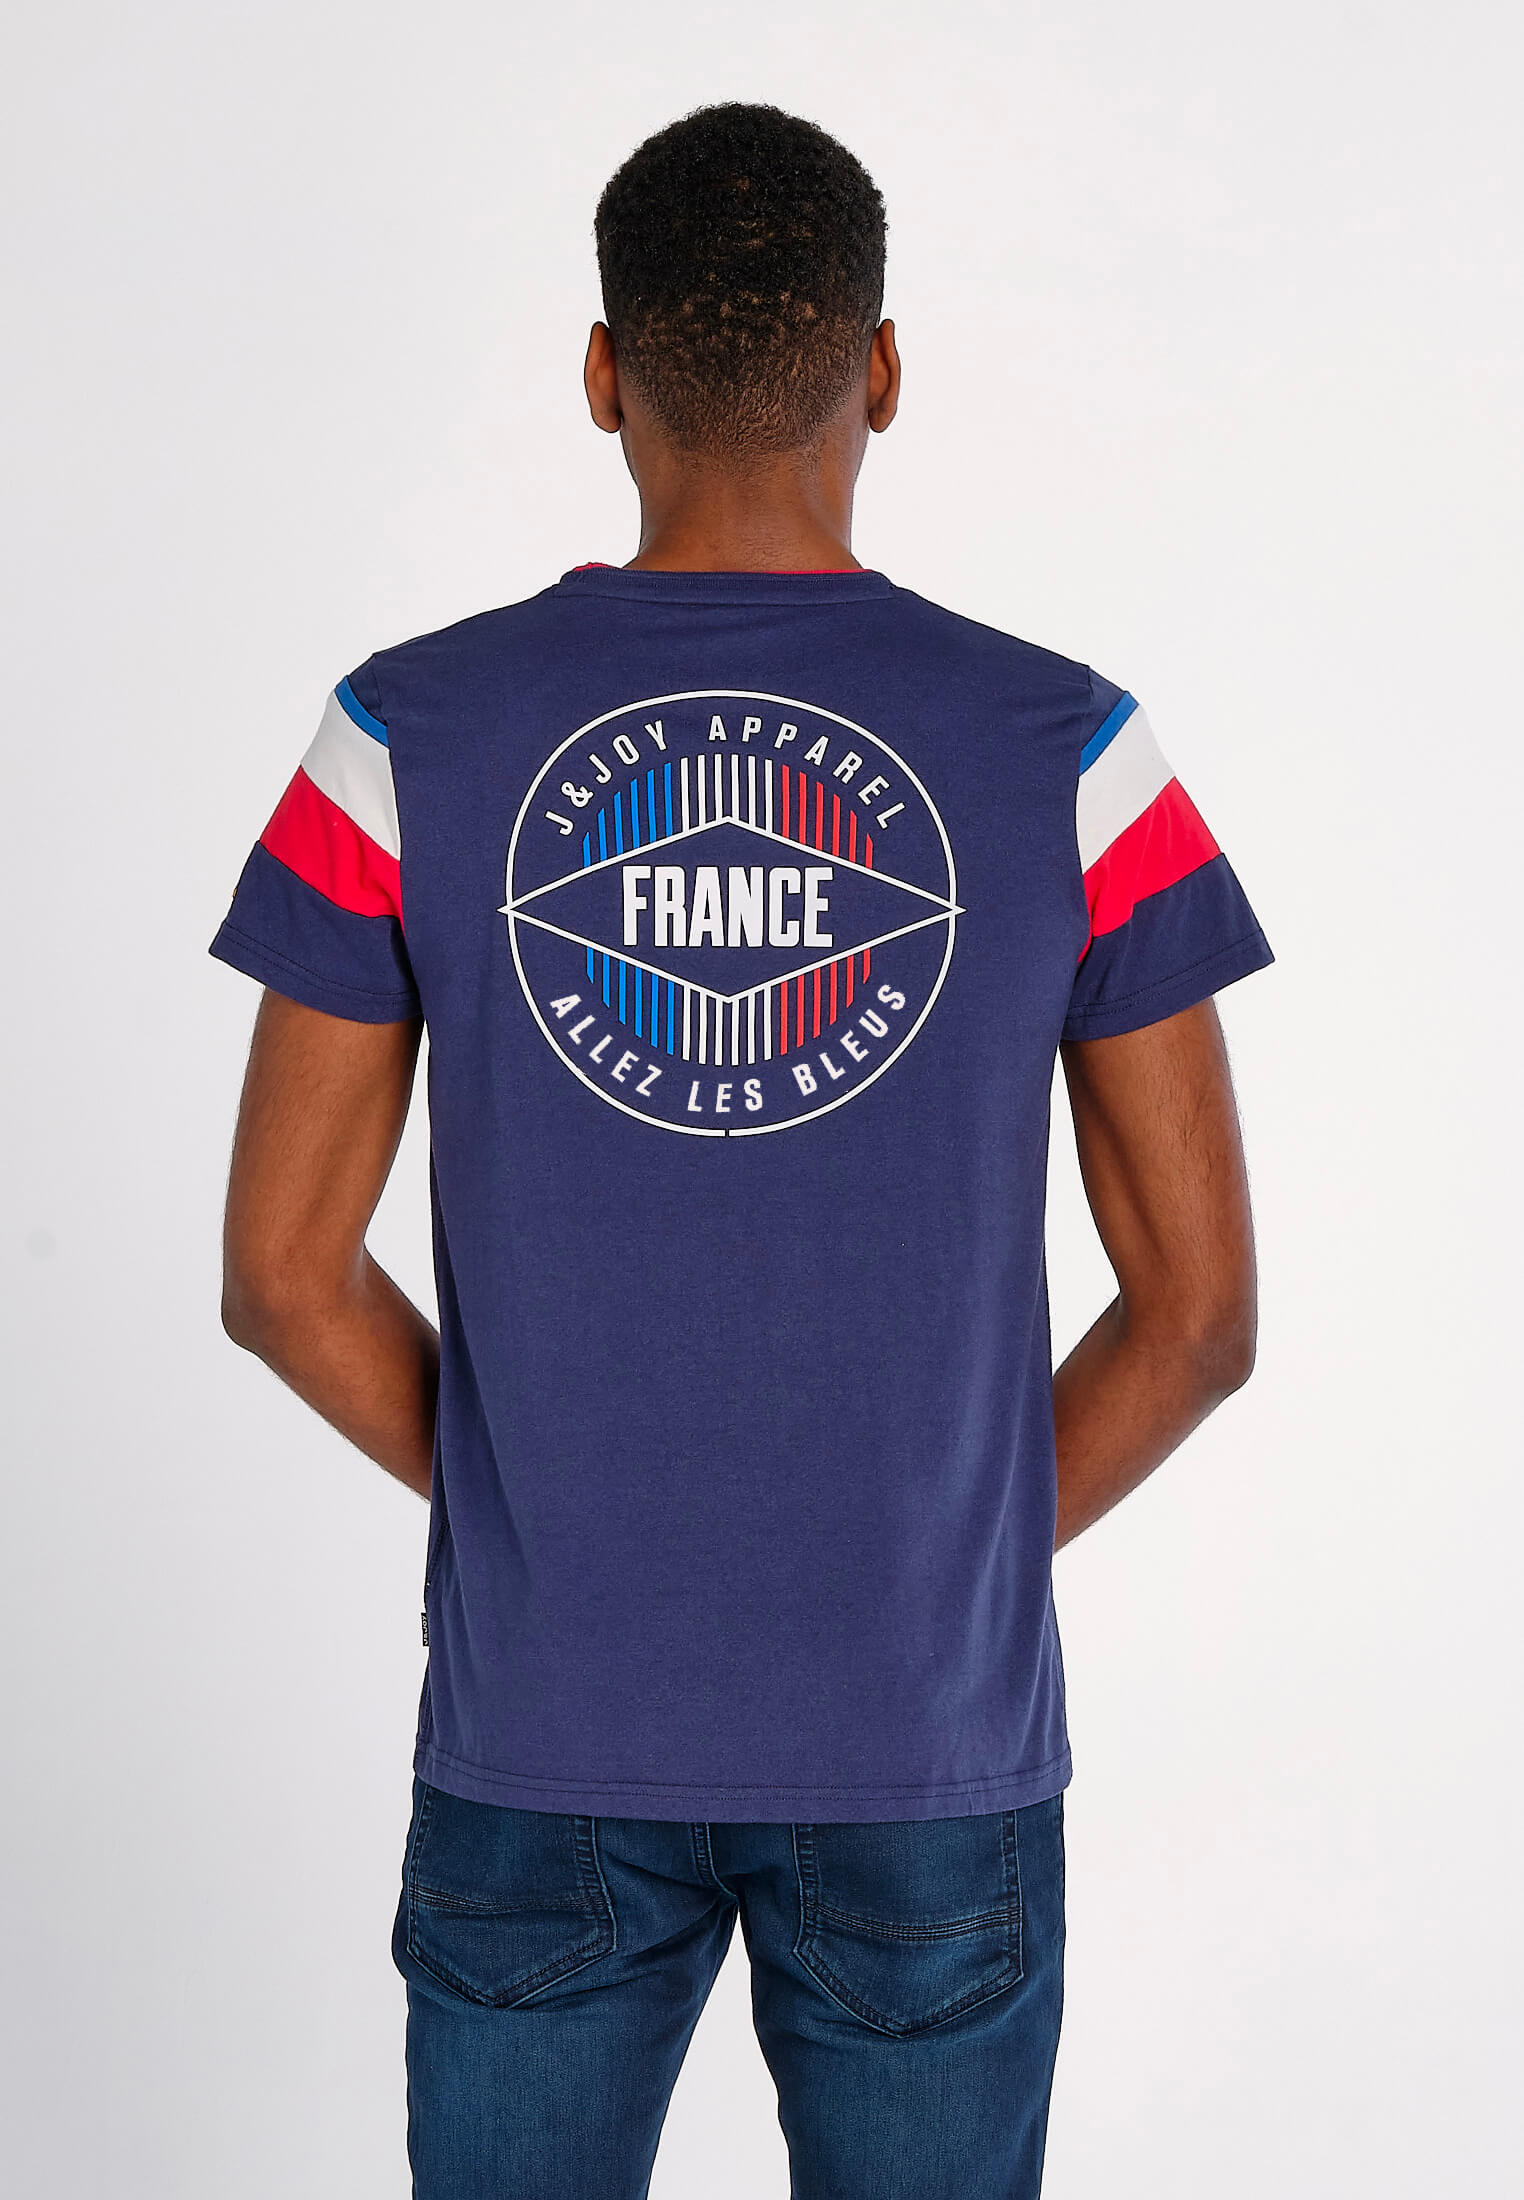 T-Shirt Homme Collector 08 Navy France | J&JOY.